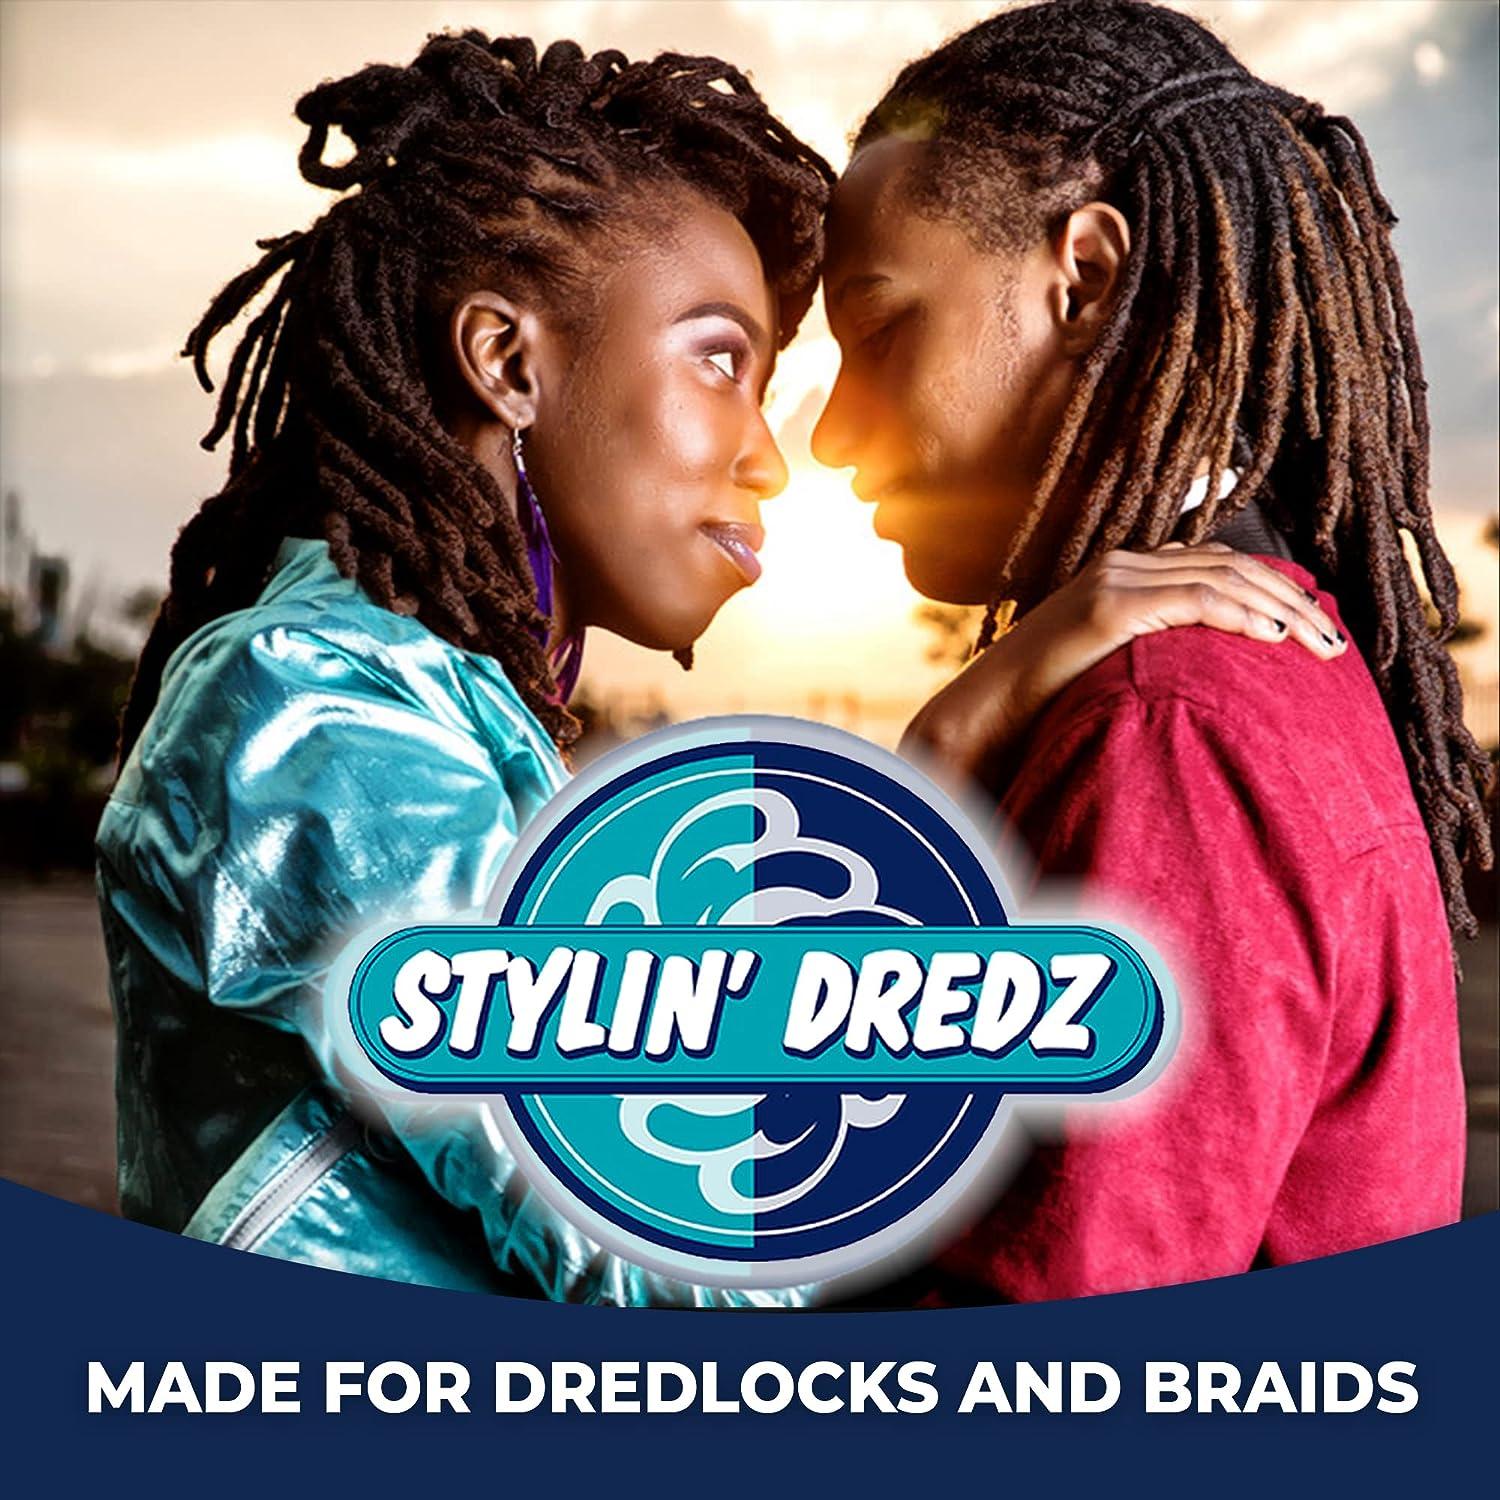 STYLING DREDZ DREADLOCK HAIR PRODUCTS